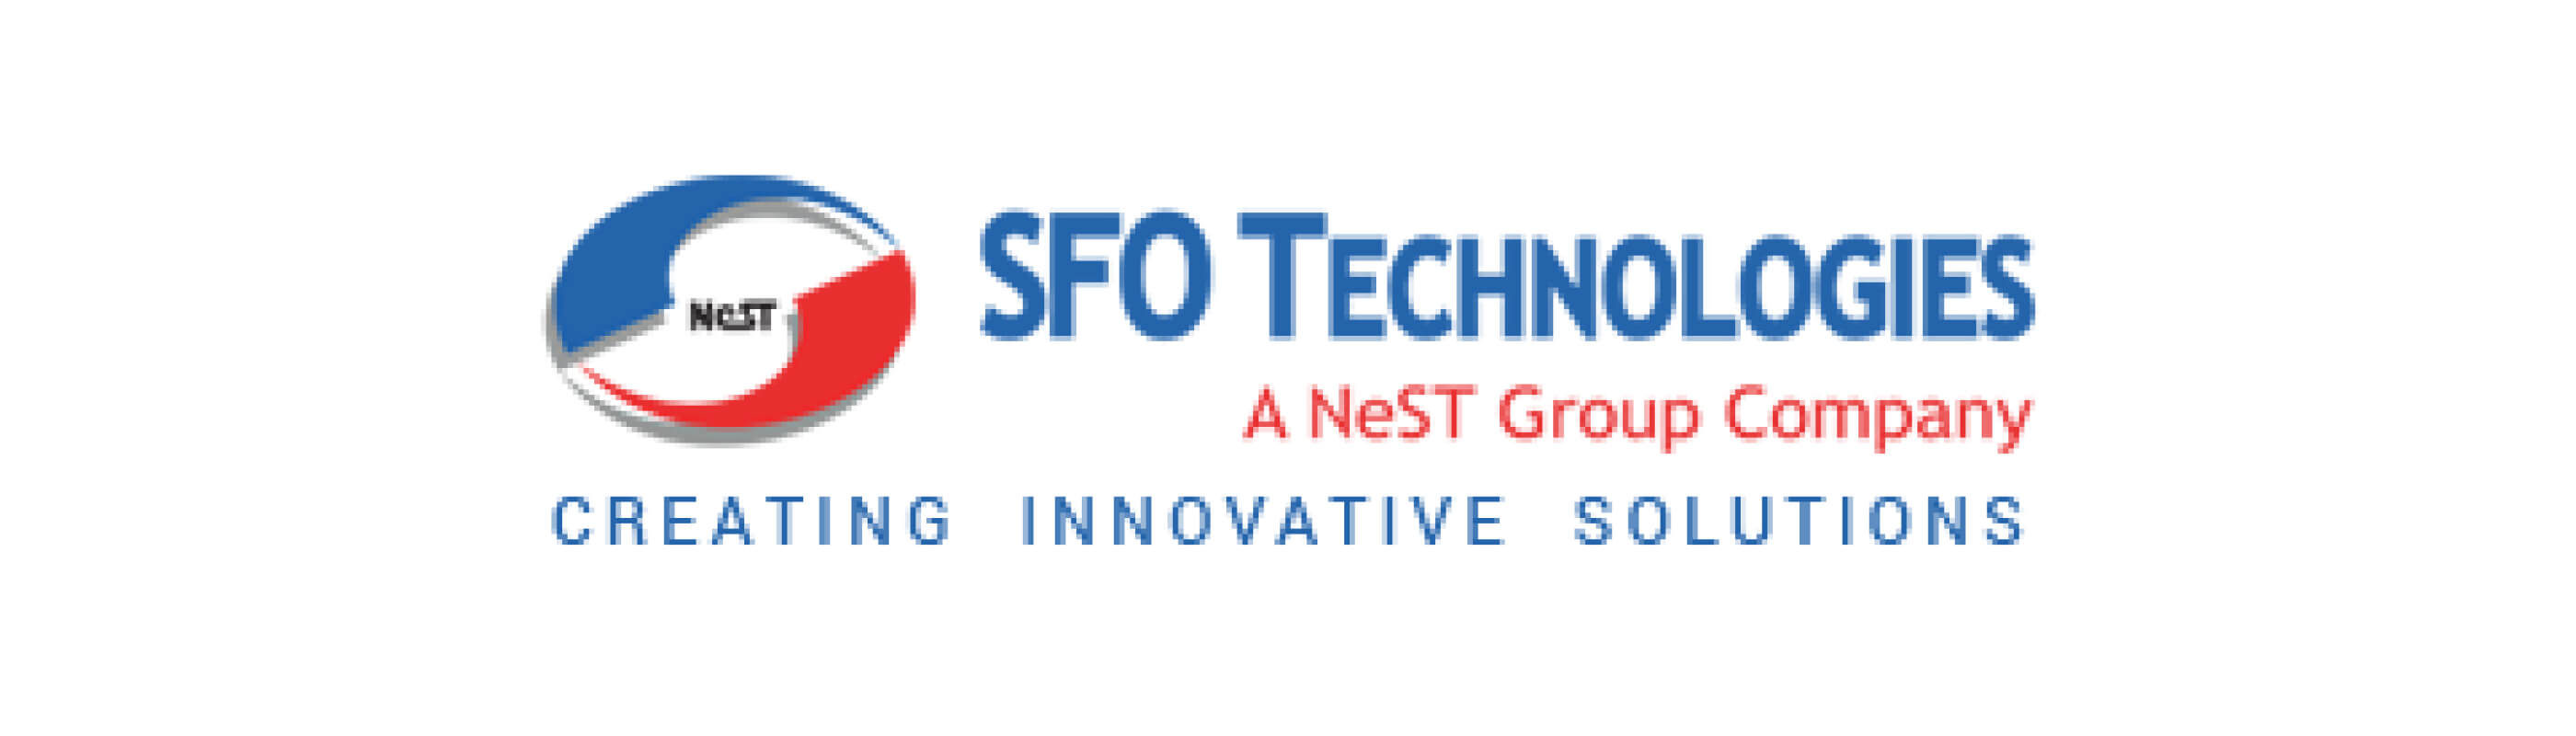 SFO Technologies logo